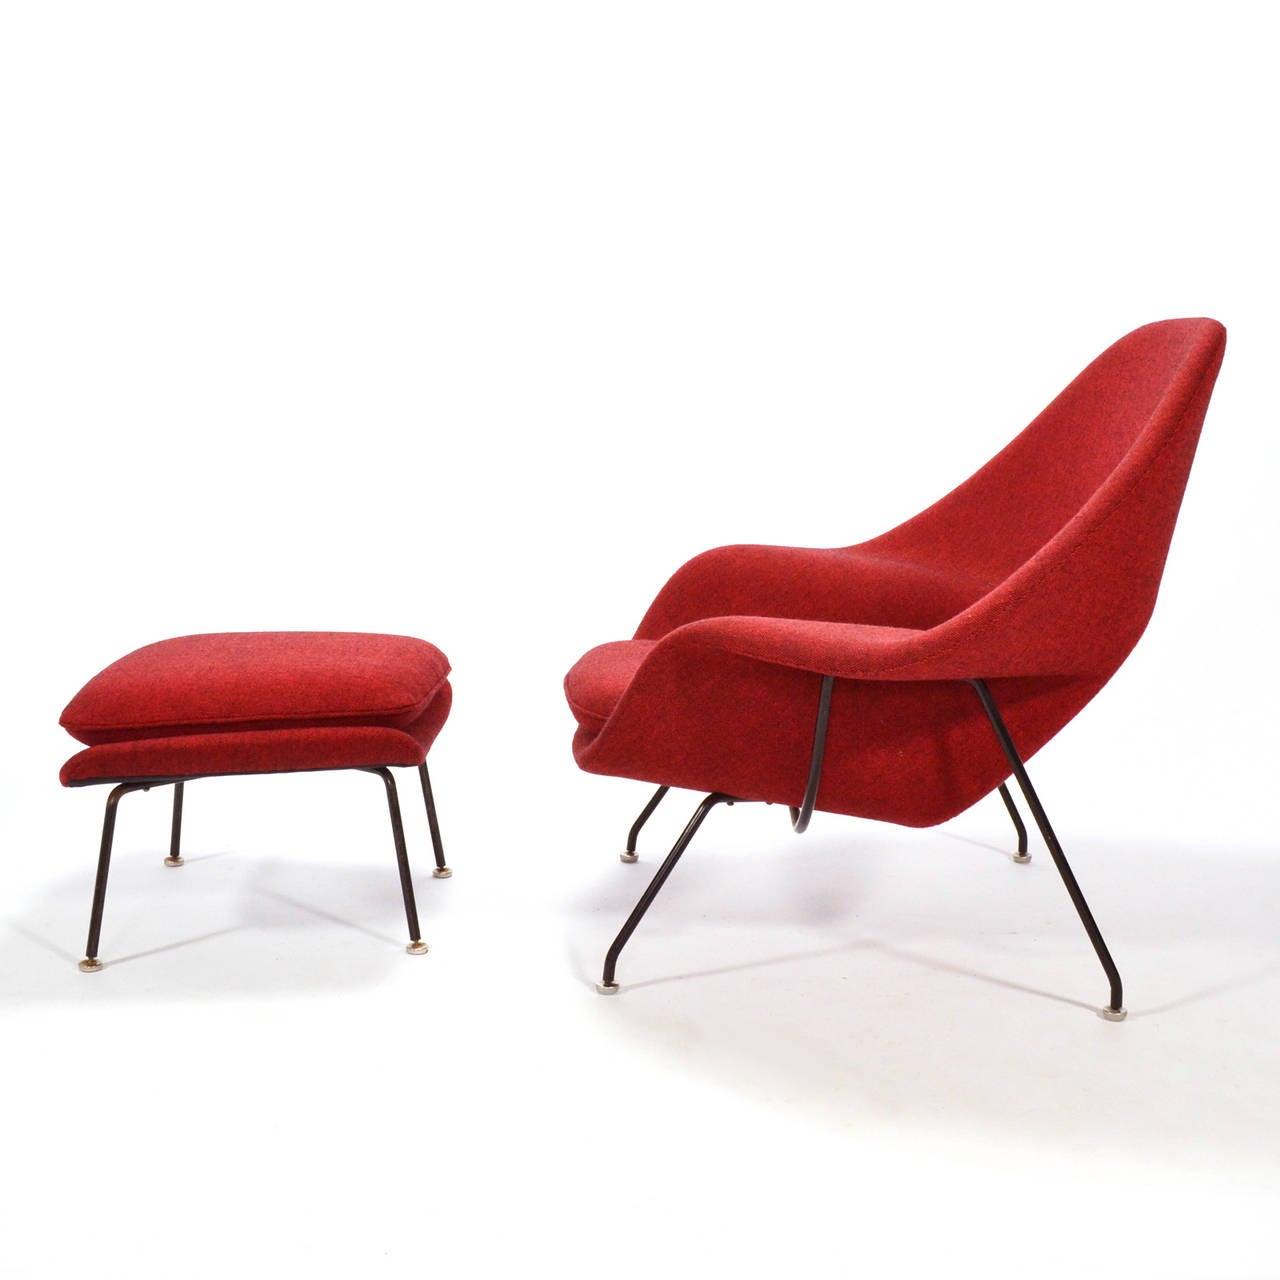 Mid-20th Century Eero Saarinen Womb Chair and Ottoman Upholstered in Alexander Girard Fabric